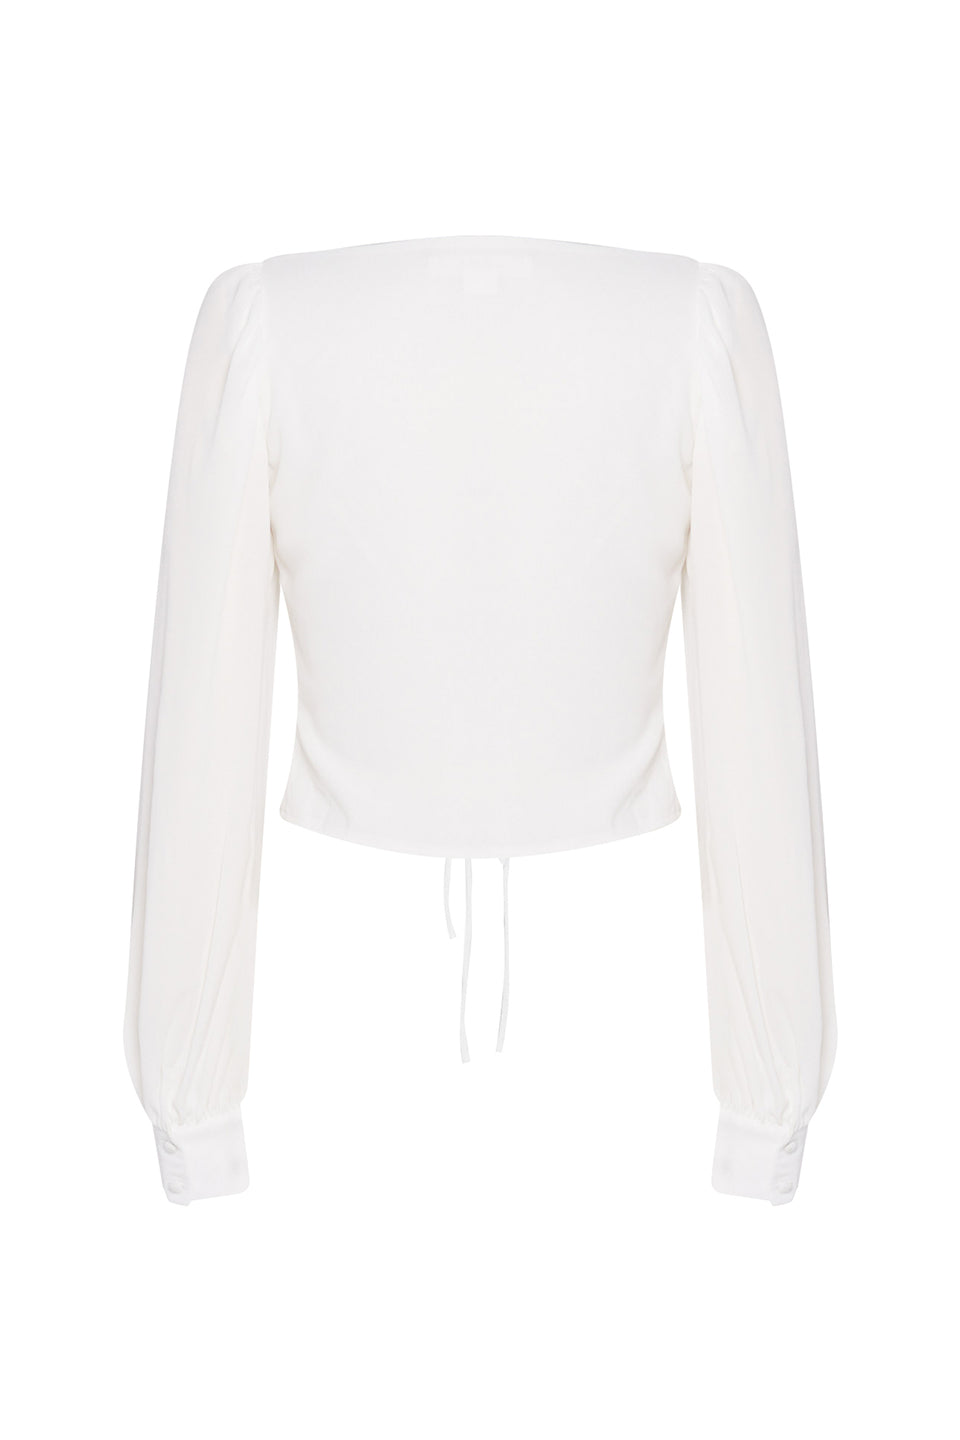 lani_the_label_row_blouse_white